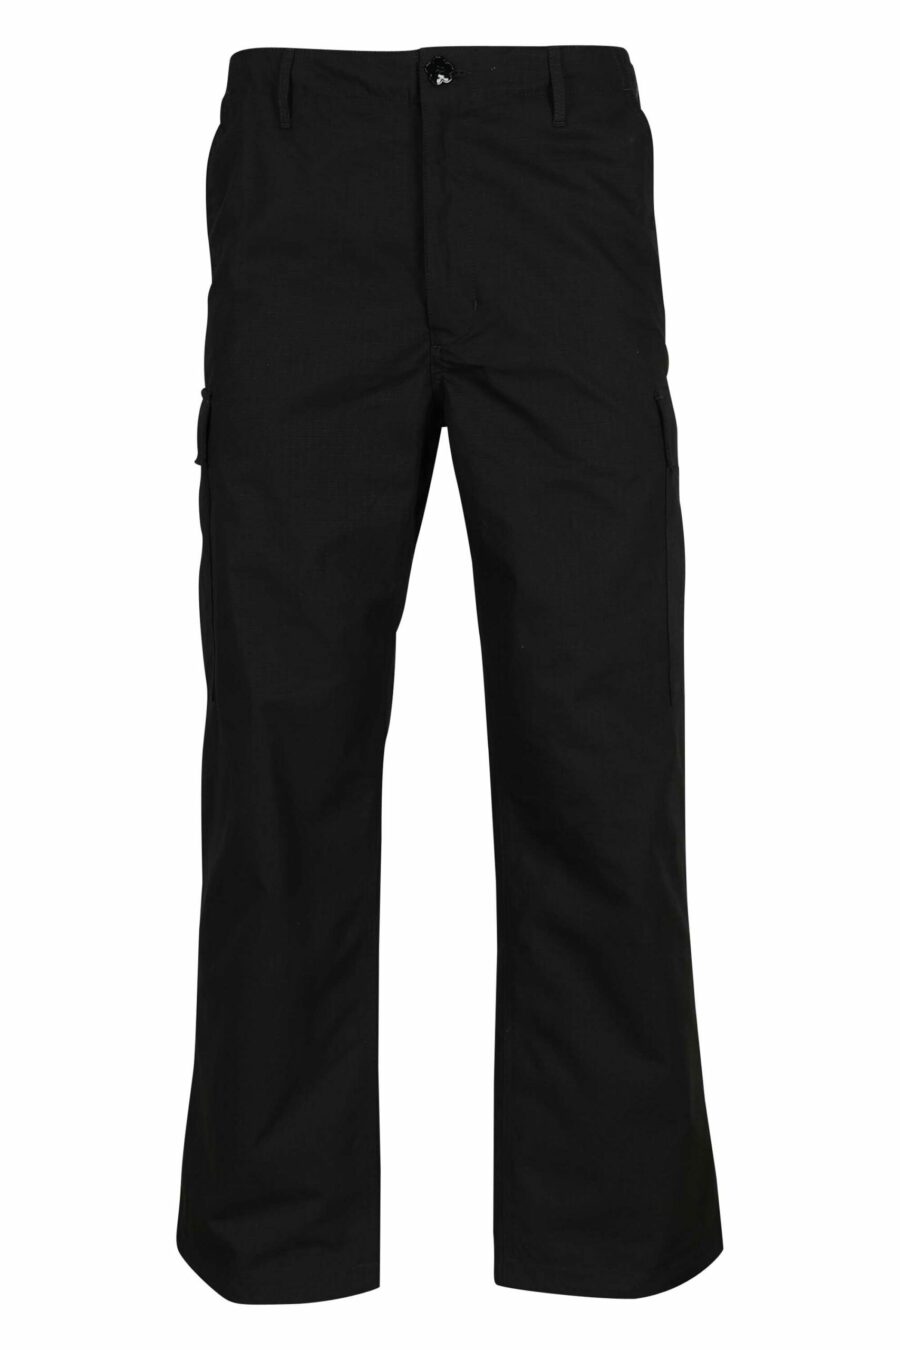 Pantalon cargo noir avec le logo "boke flower" - 3612230618855